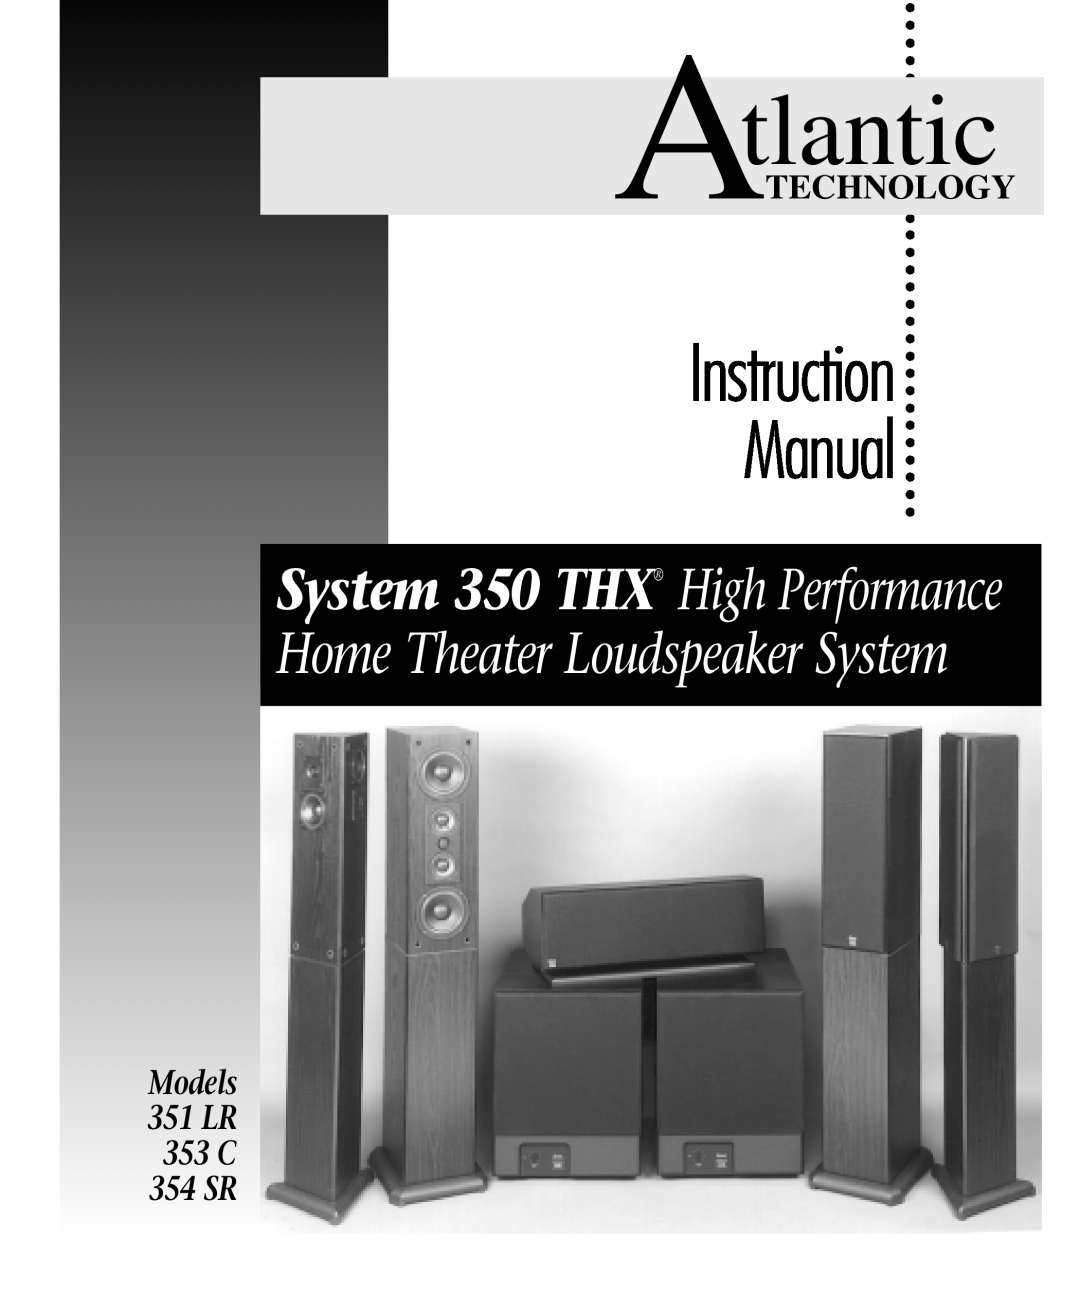 Atlantic Technology instruction manual Technology, Atlantic, System 350 THX High Performance, Models 351LR 353 C 354 SR 